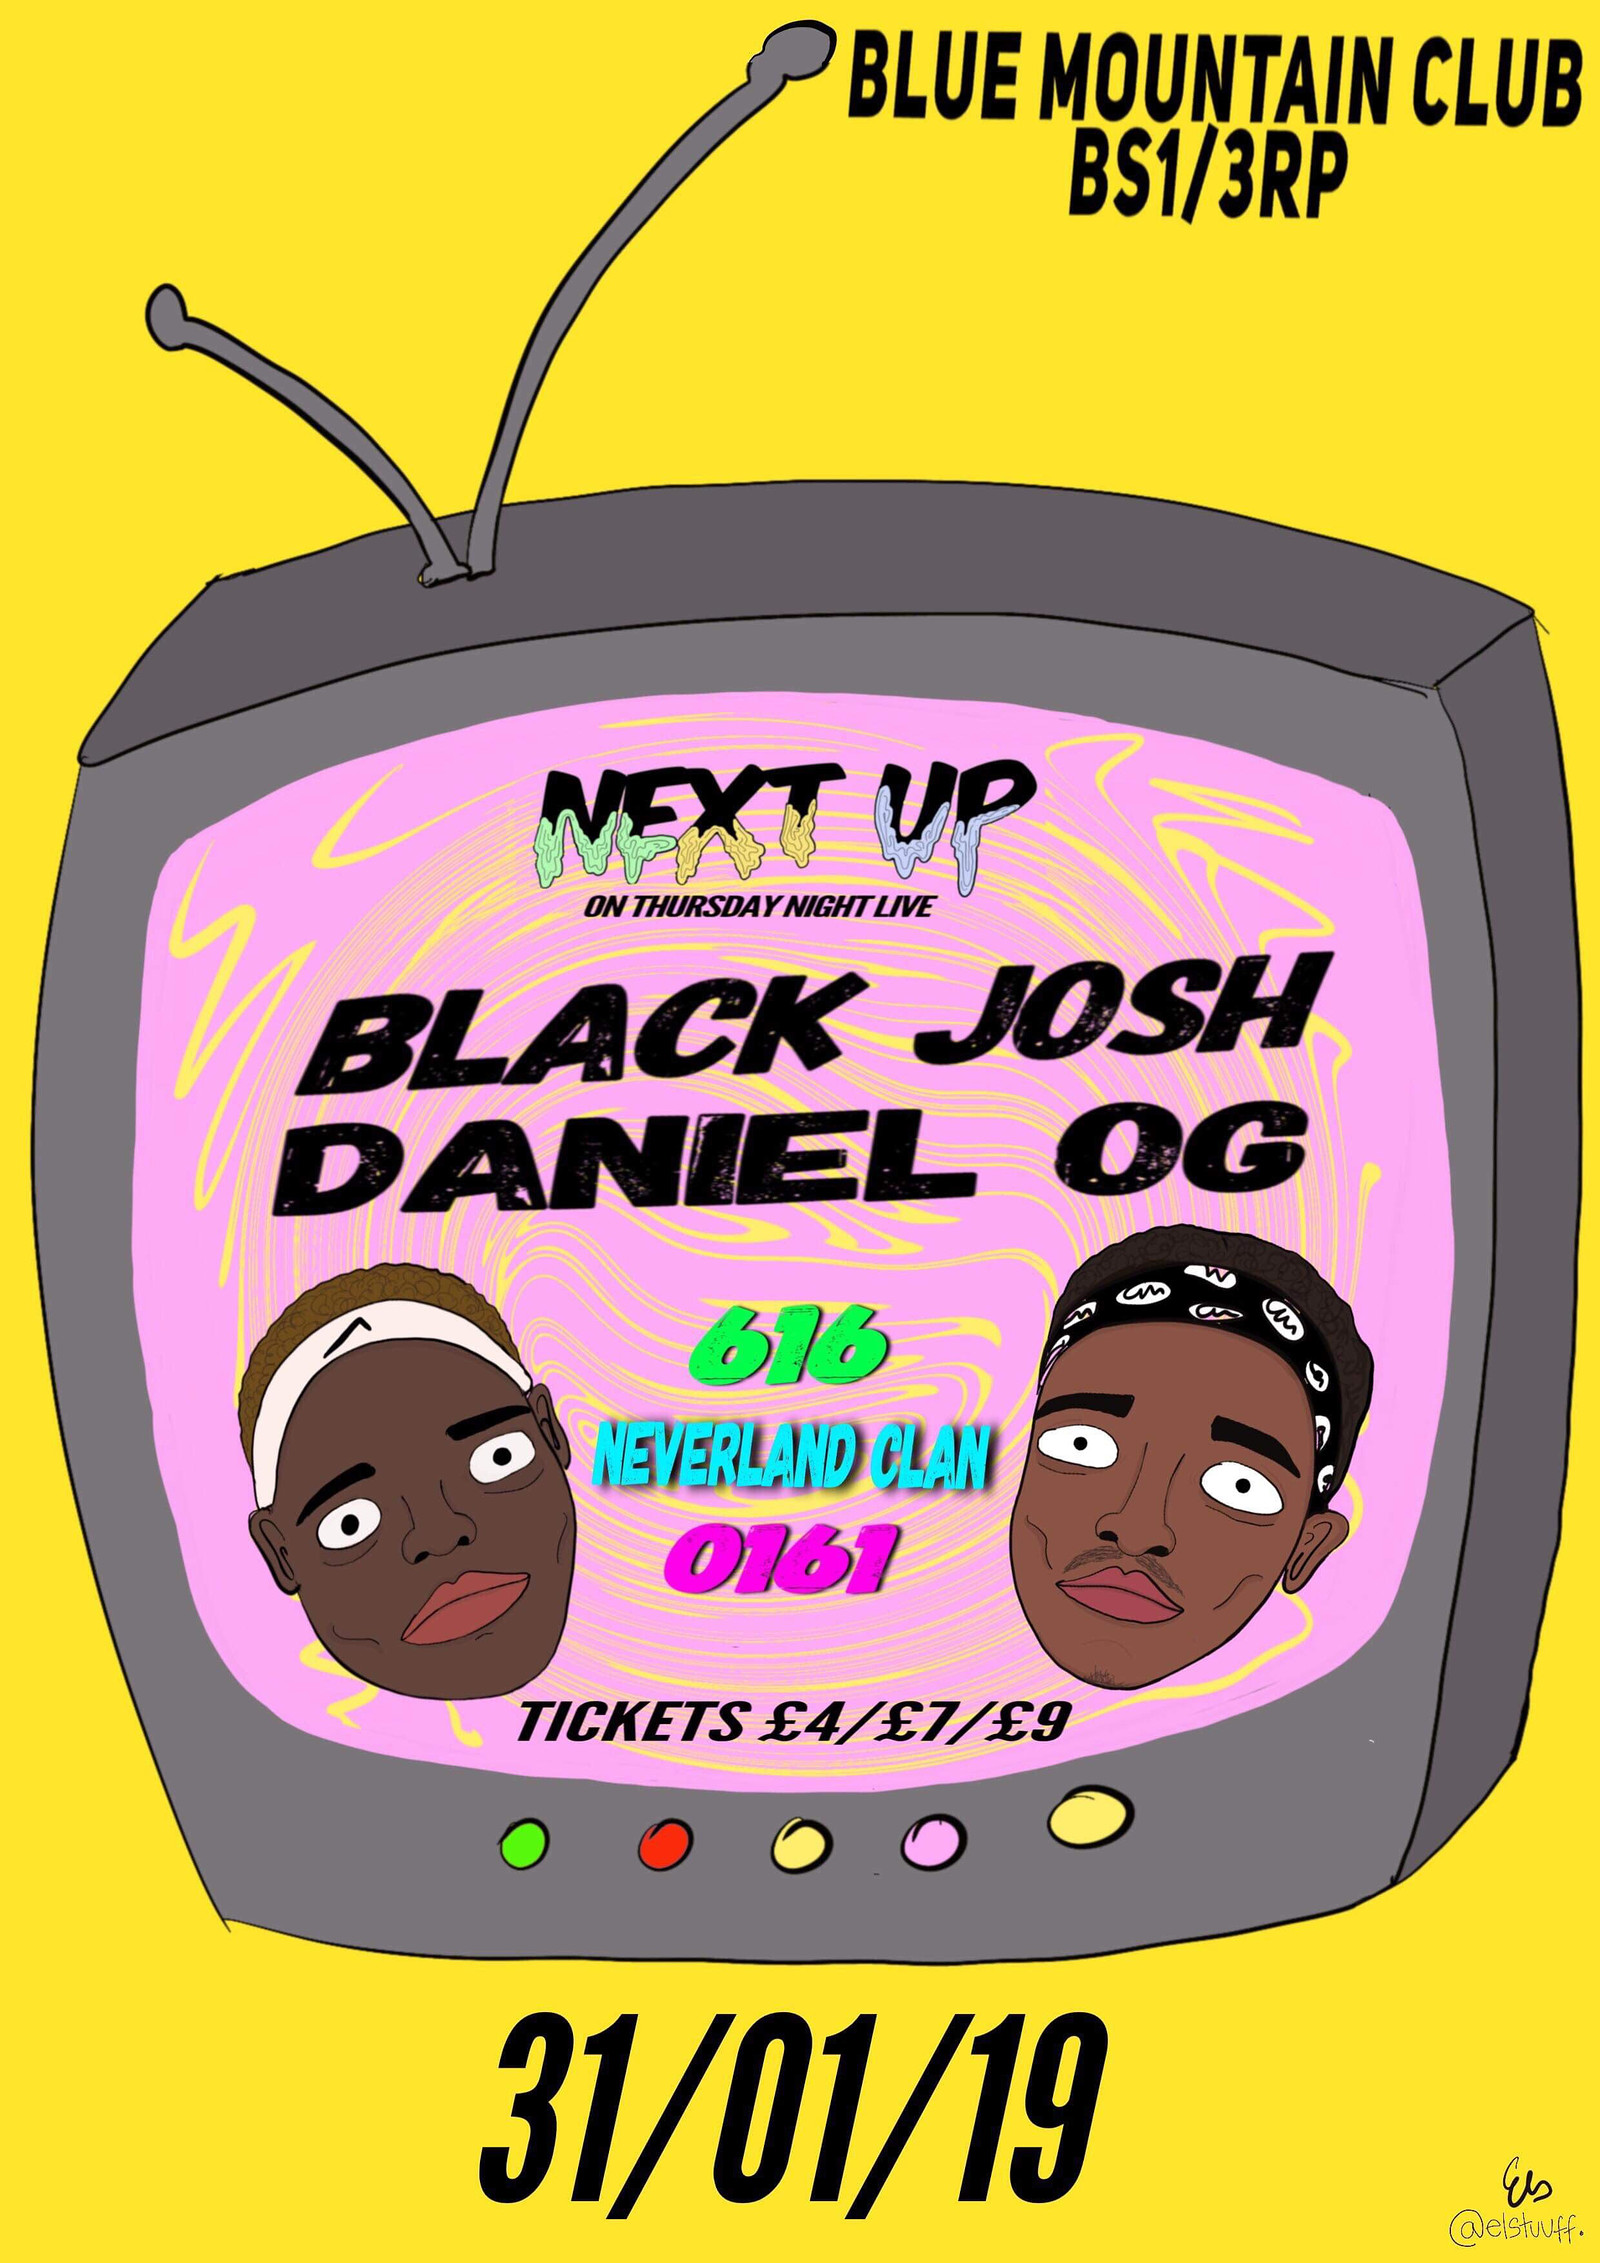 Next Up Presents: 0161/0207 Black Josh & Daniel OG at Blue Mountain